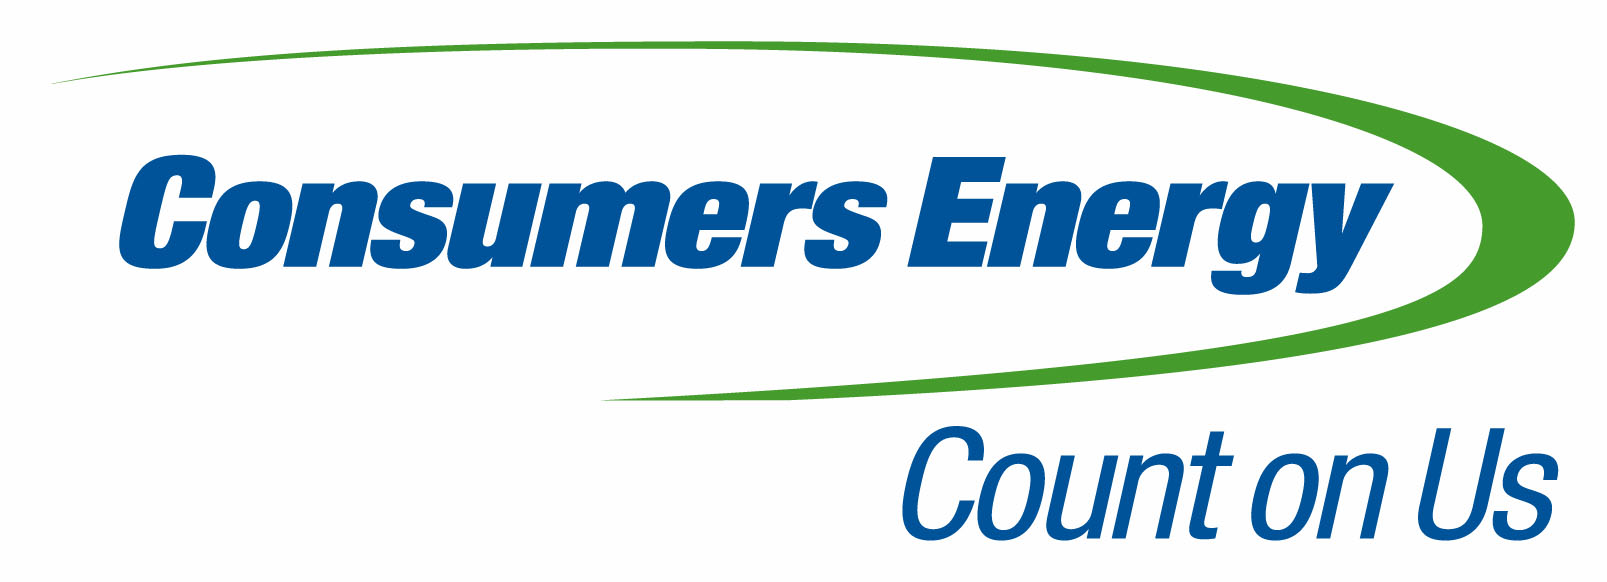 Consumers Energy logo.jpg